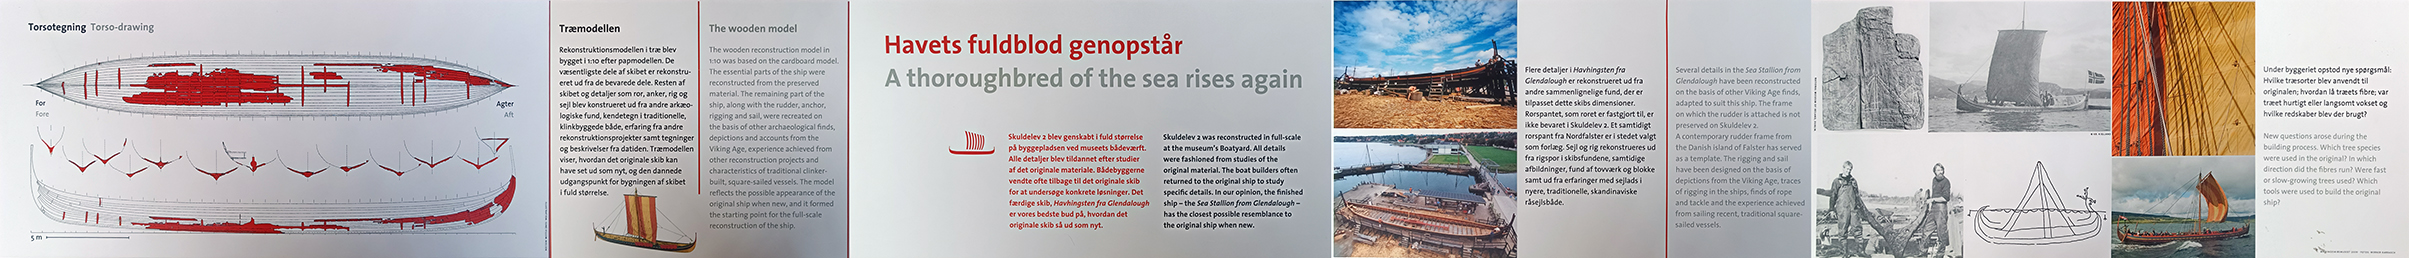 Roskilde - Vikingmuseum - Informatiebord Skuldelev 2 Oorlogsschip [Longship]